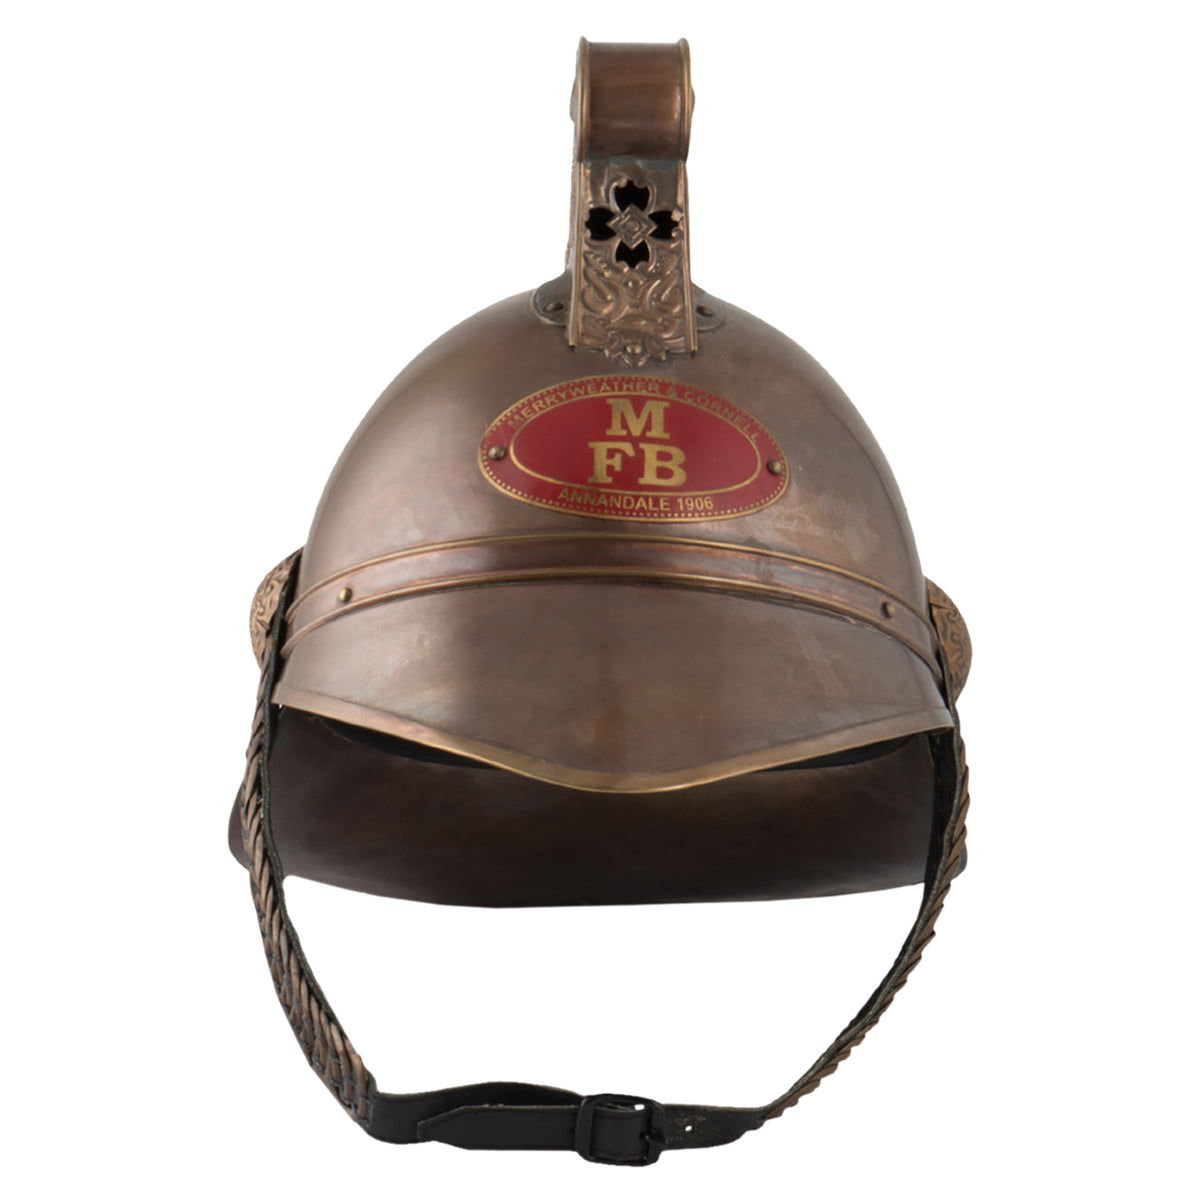 Vintage Fireman Helmet – MFB - Notbrand